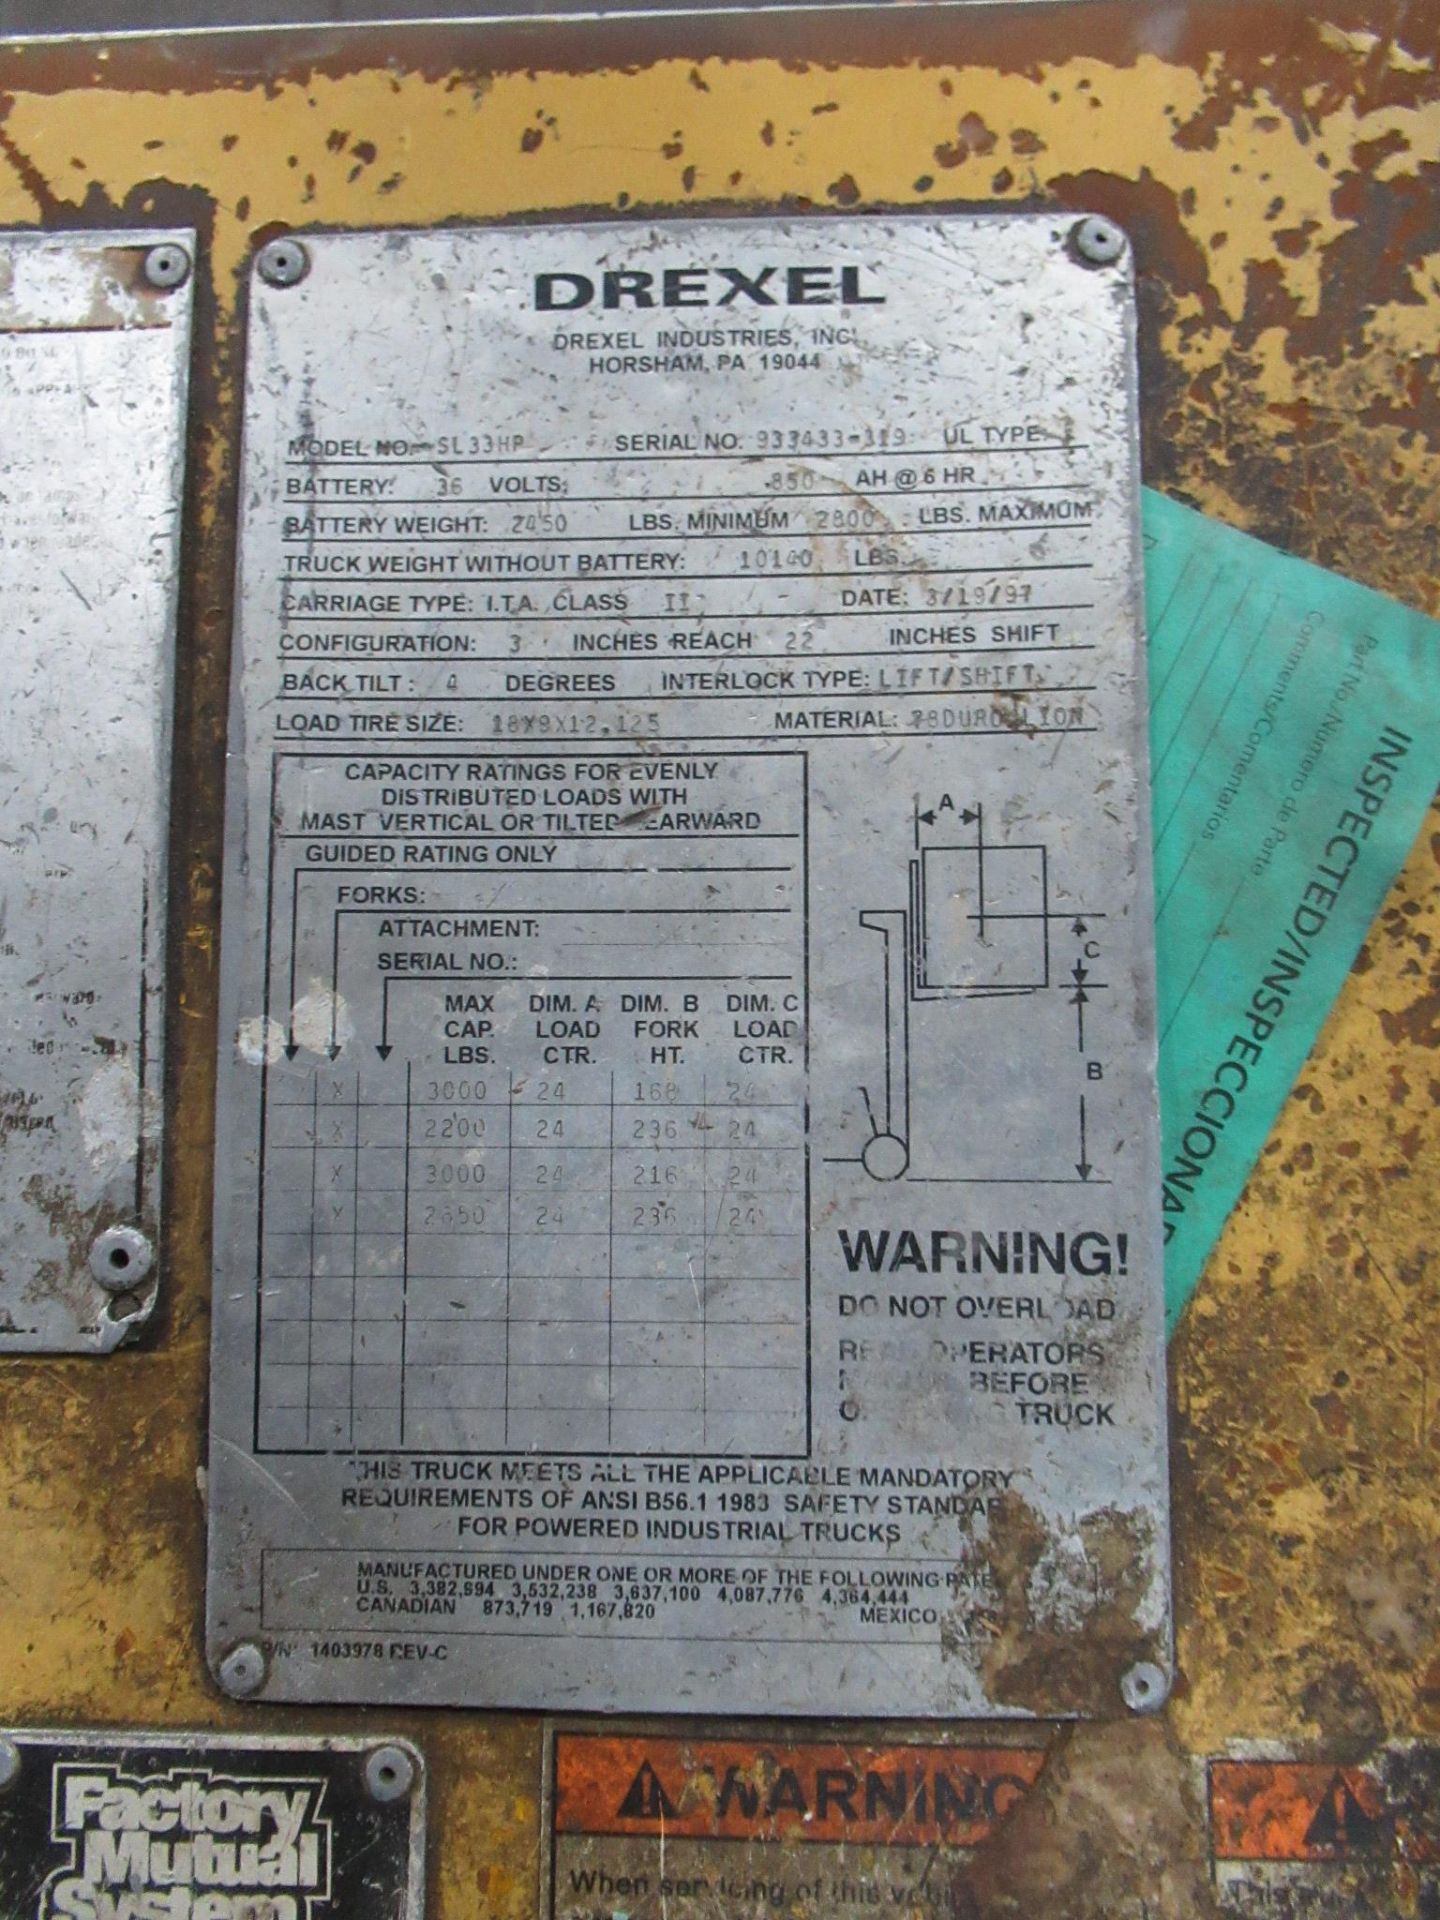 Drexel Model SL33HP Electric Fork Lift, s/n 933433-319, 3,000 Lb. Capacity, 36 V - Image 12 of 23